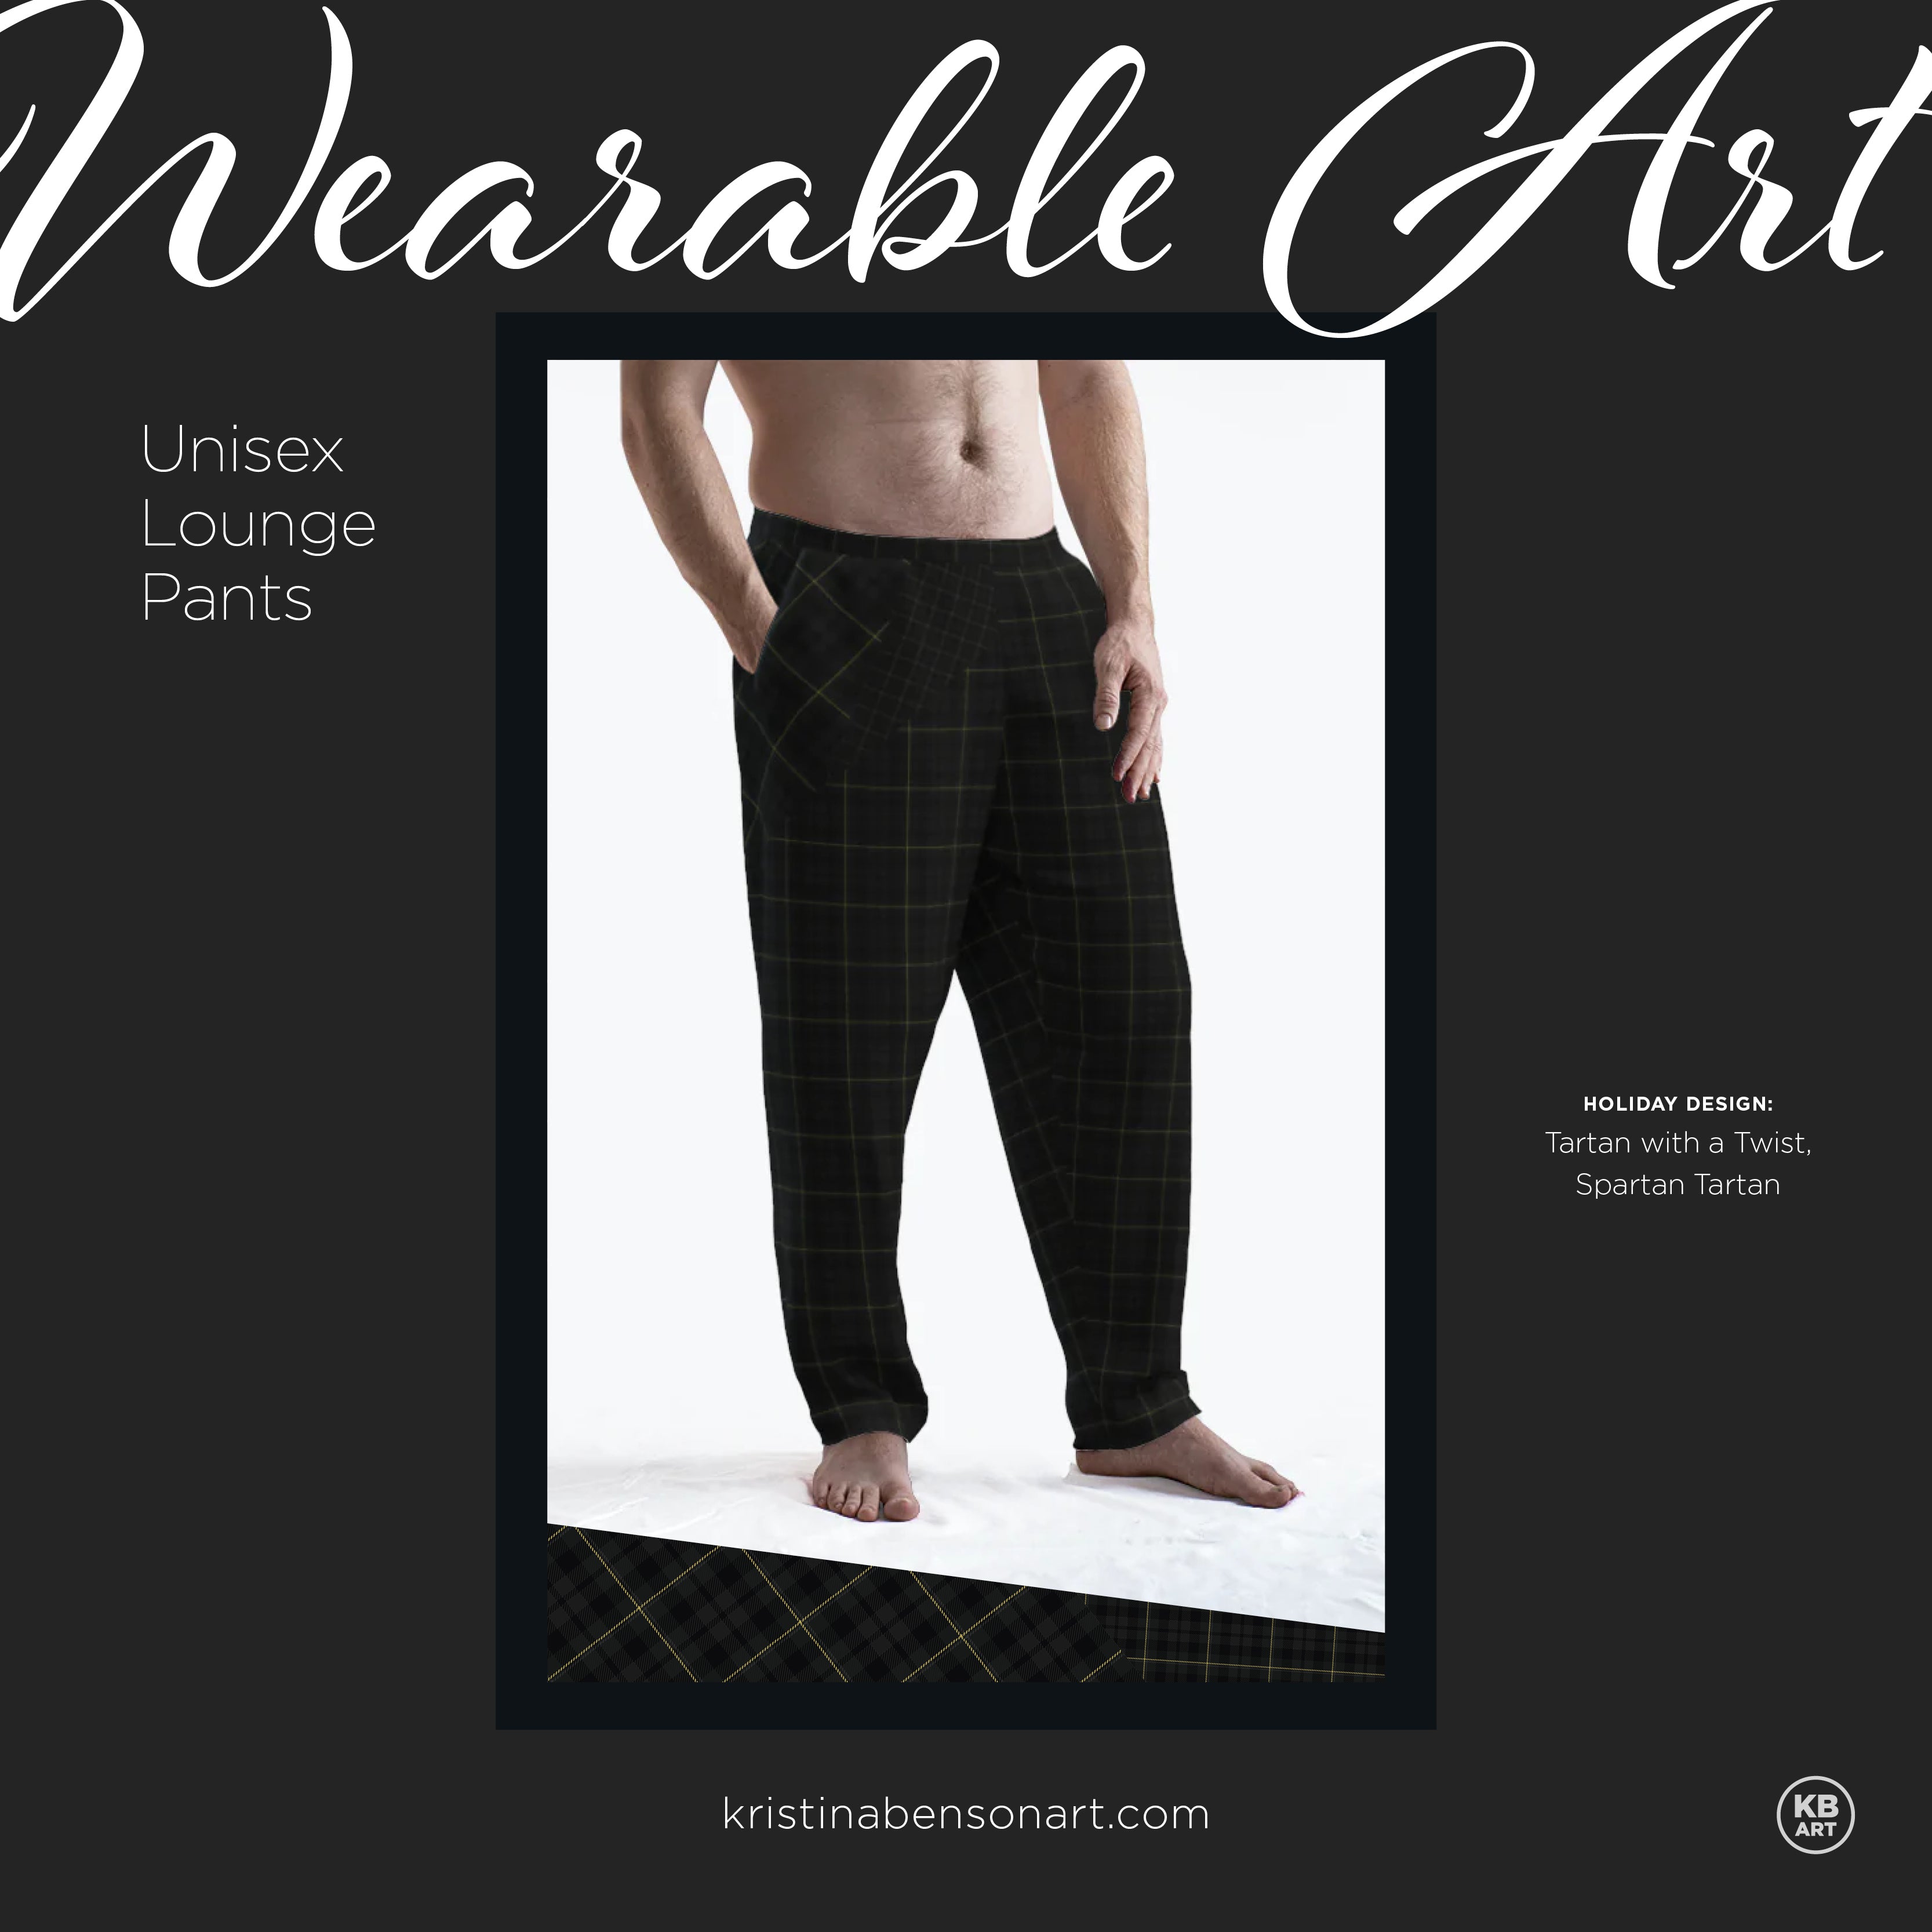 Tartan with a Twist, Spartan Tartan – Unisex Lounge Pants